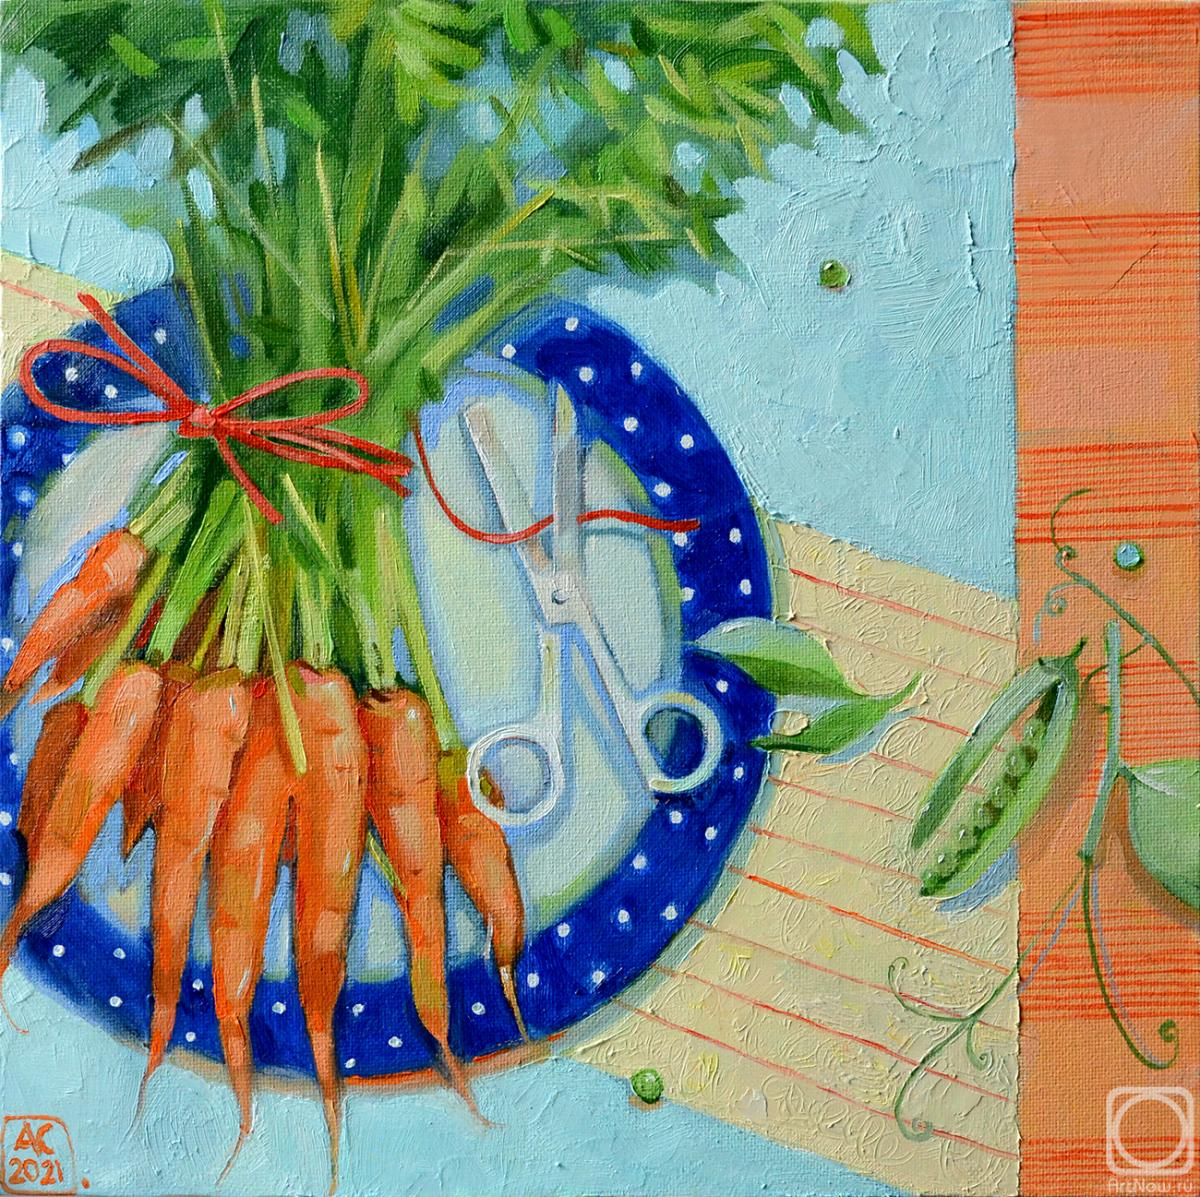 Sergeeva Aleksandra. Still life with carrots and peas